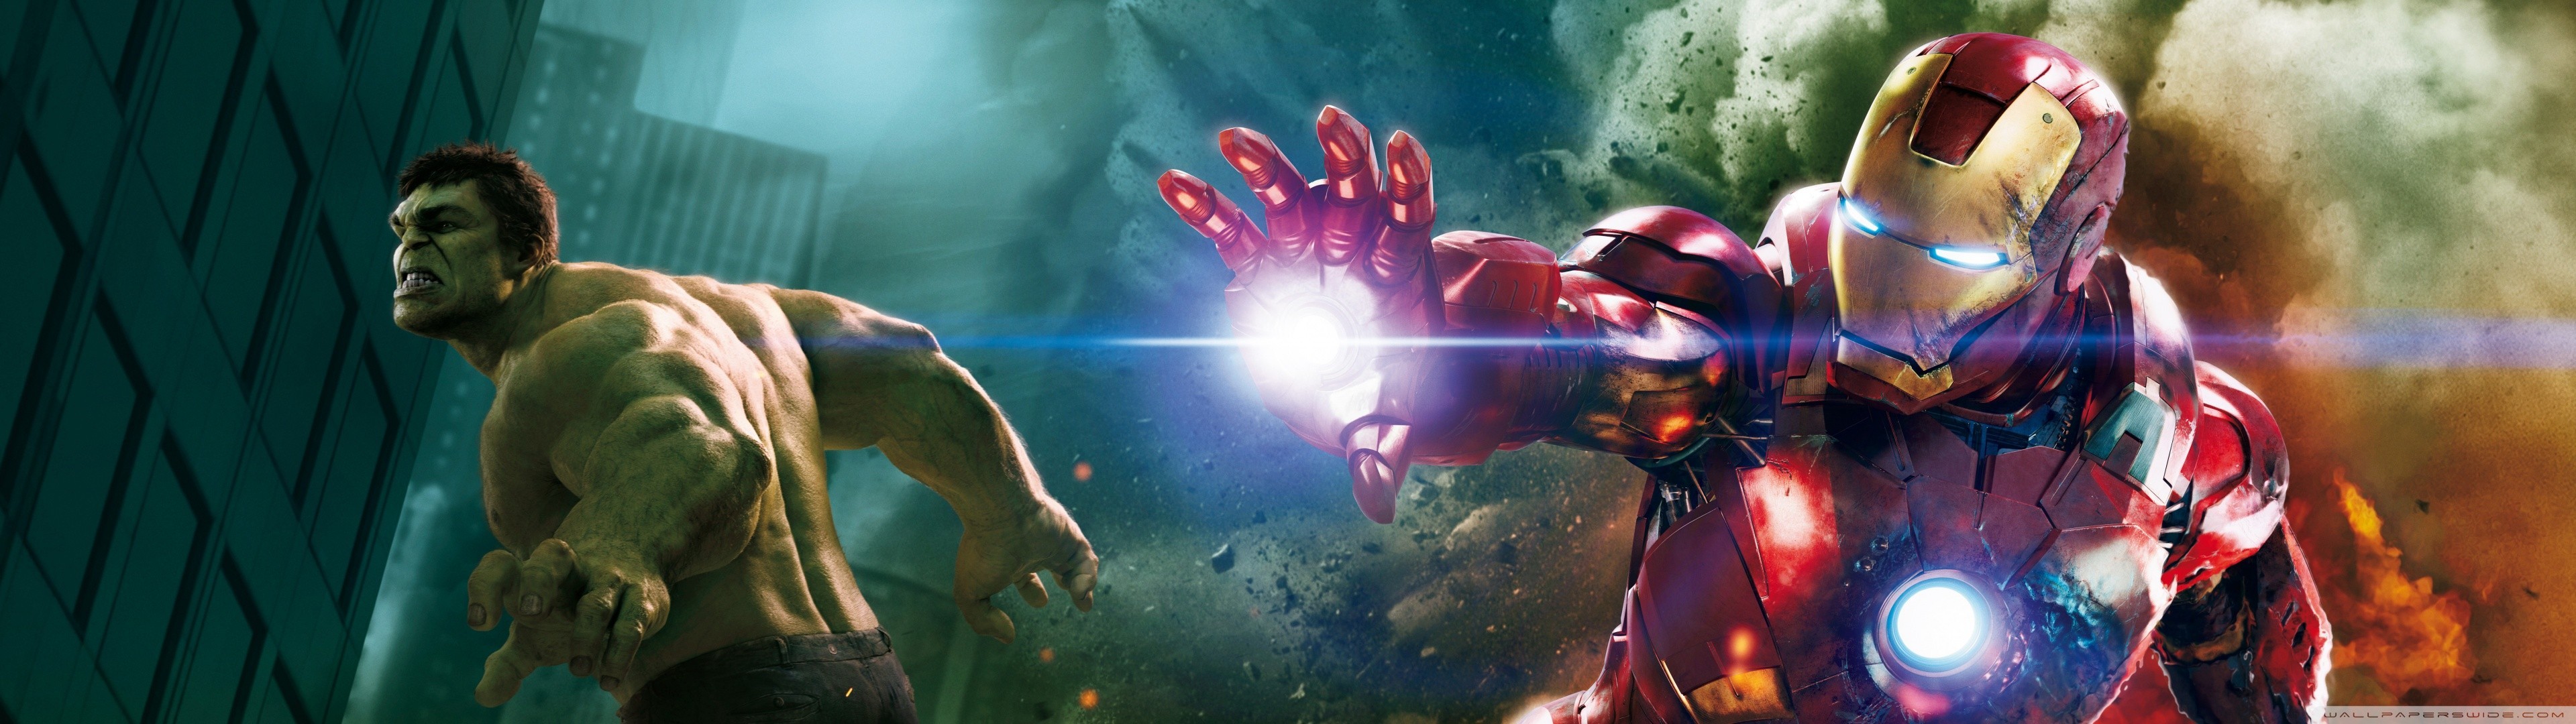 General 3840x1080 Iron Man Hulk Marvel Cinematic Universe armor explosion movies superhero